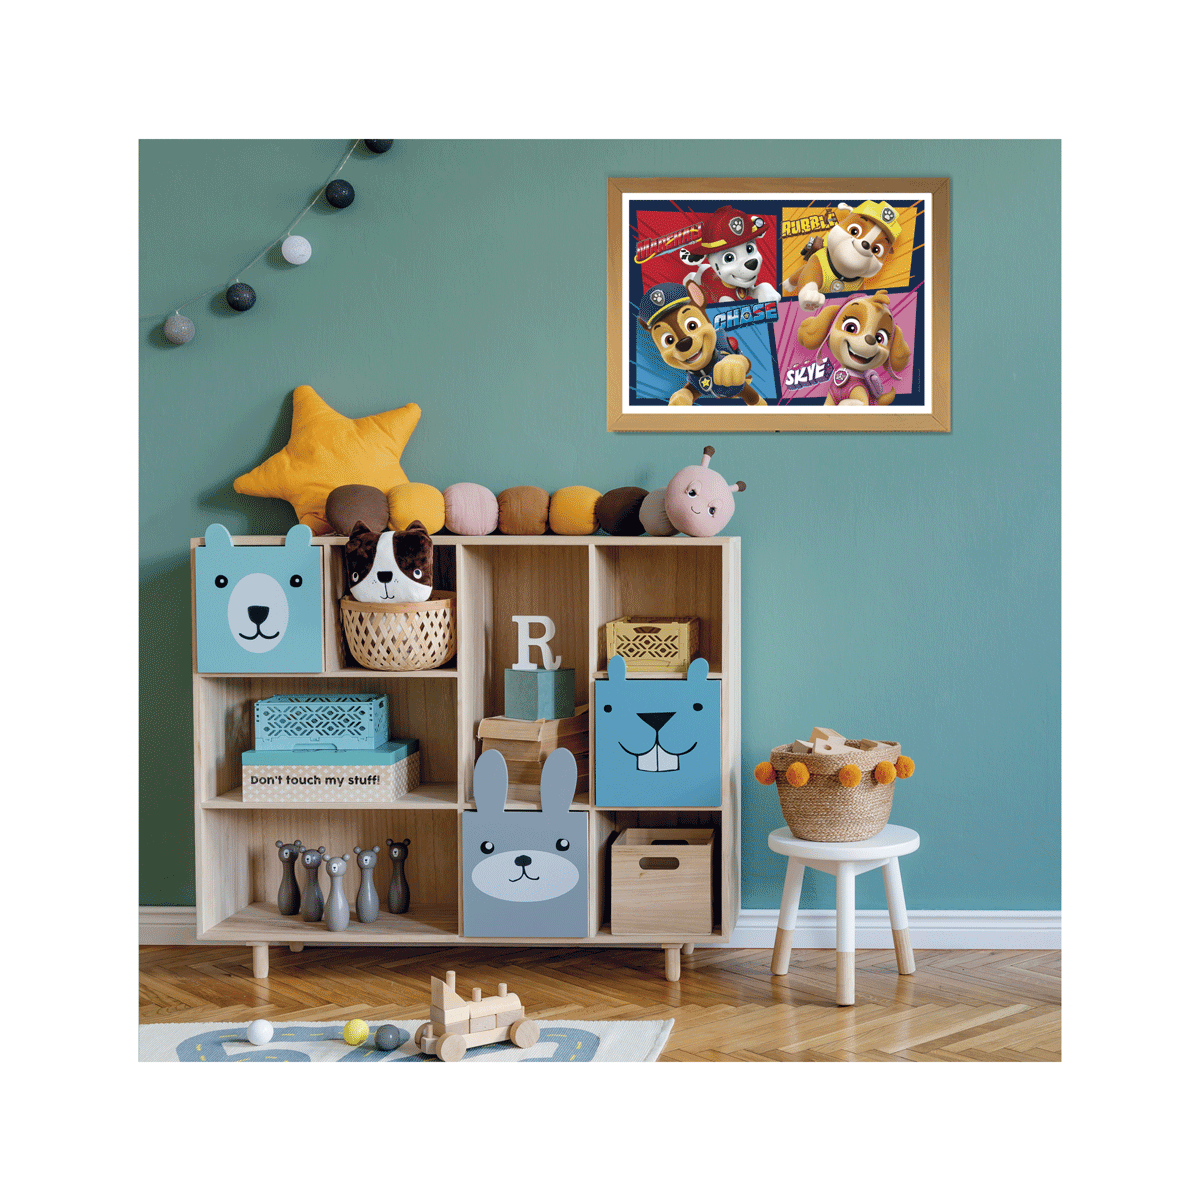 Clementoni supercolor puzzle paw patrol - 24 maxi pezzi, puzzle bambini 3 anni - CLEMENTONI